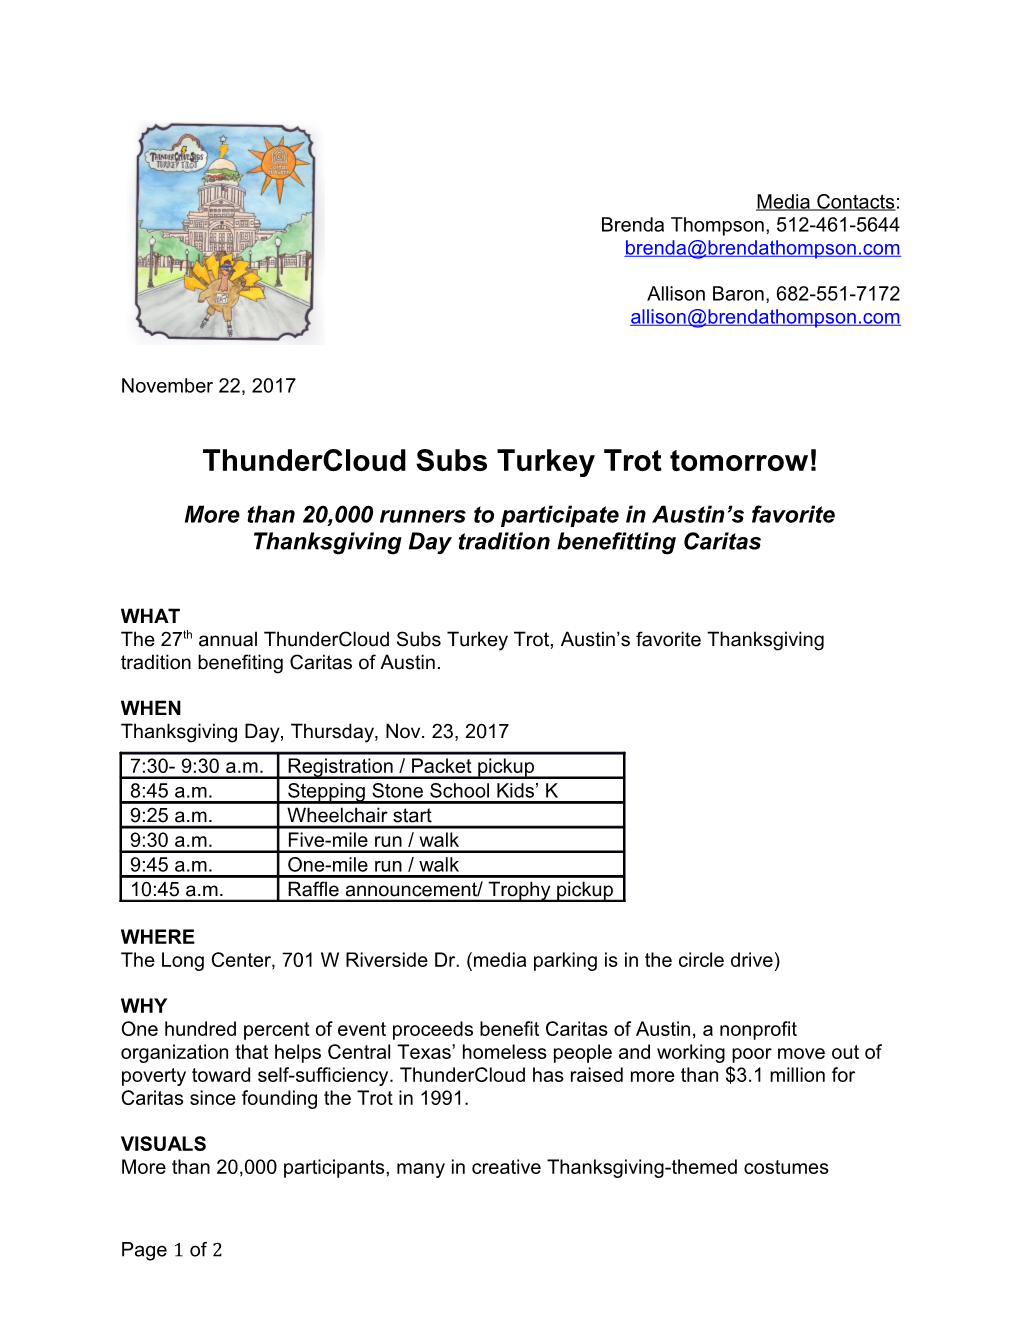 Thundercloud Subs Turkey Trot Tomorrow!